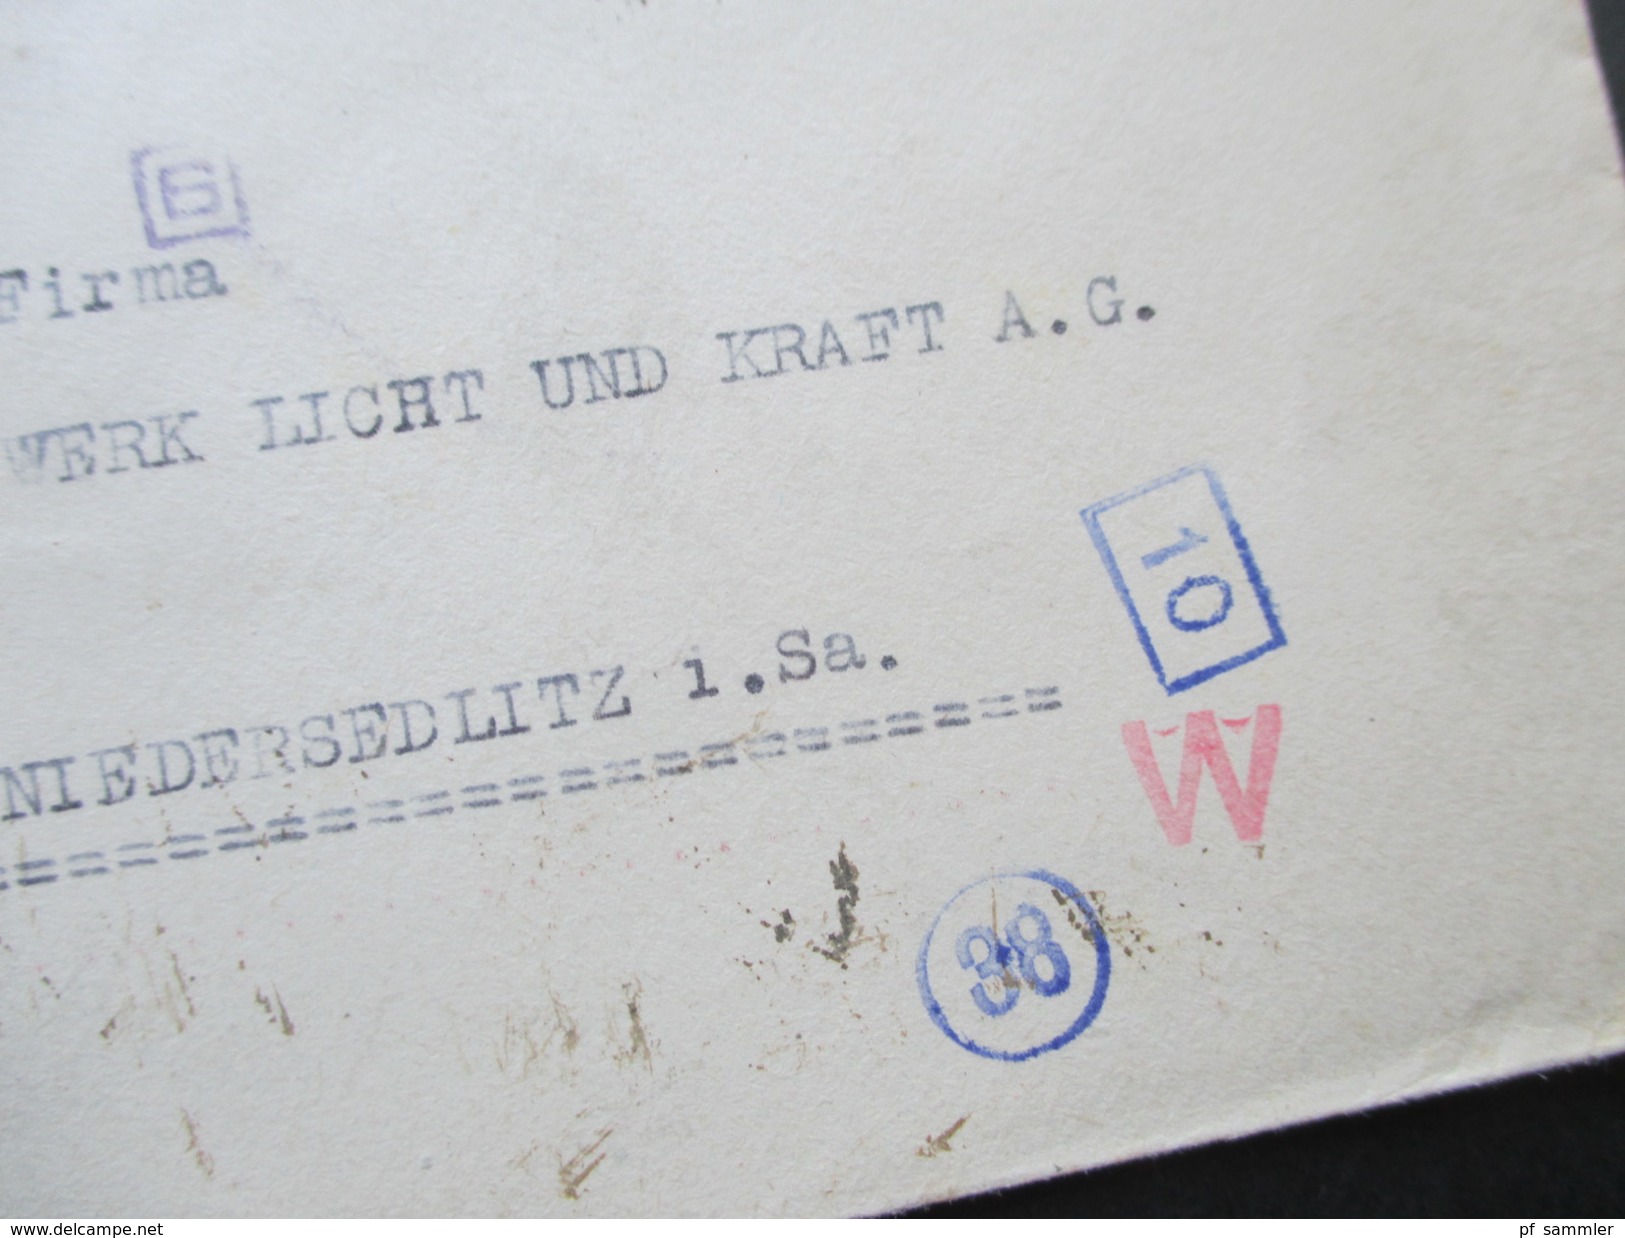 Italien 1942 Zensurpost  Viele Zensurstempel / Mehrfachzensur . OKW Wehrmacht / Verificato Per Censura Torino 16 Usw... - War Propaganda